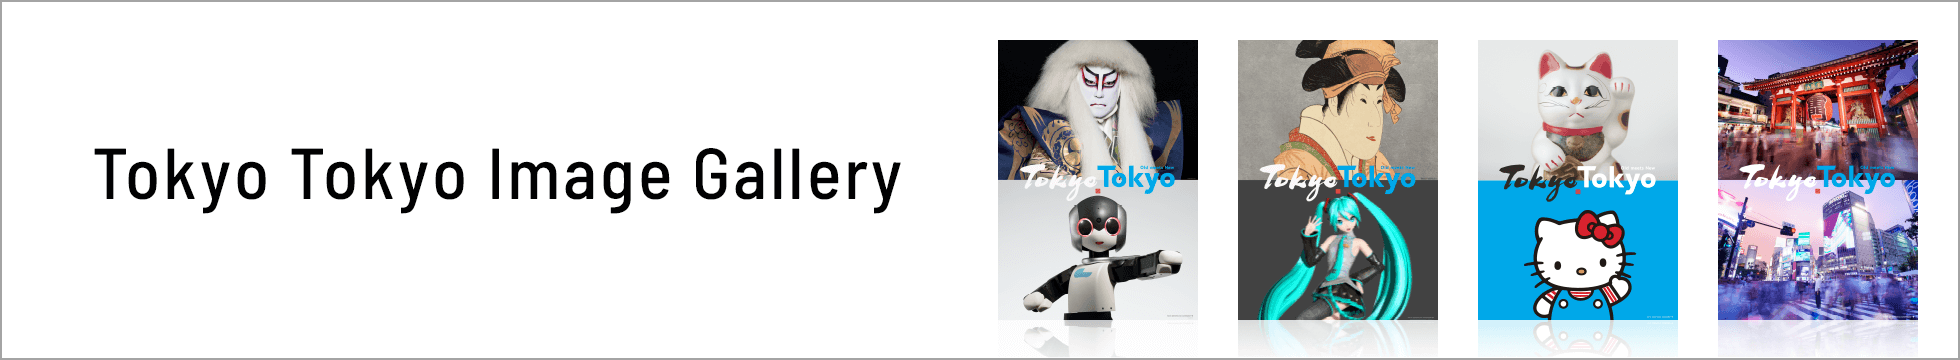 Tokyo Tokyo image gallary banner